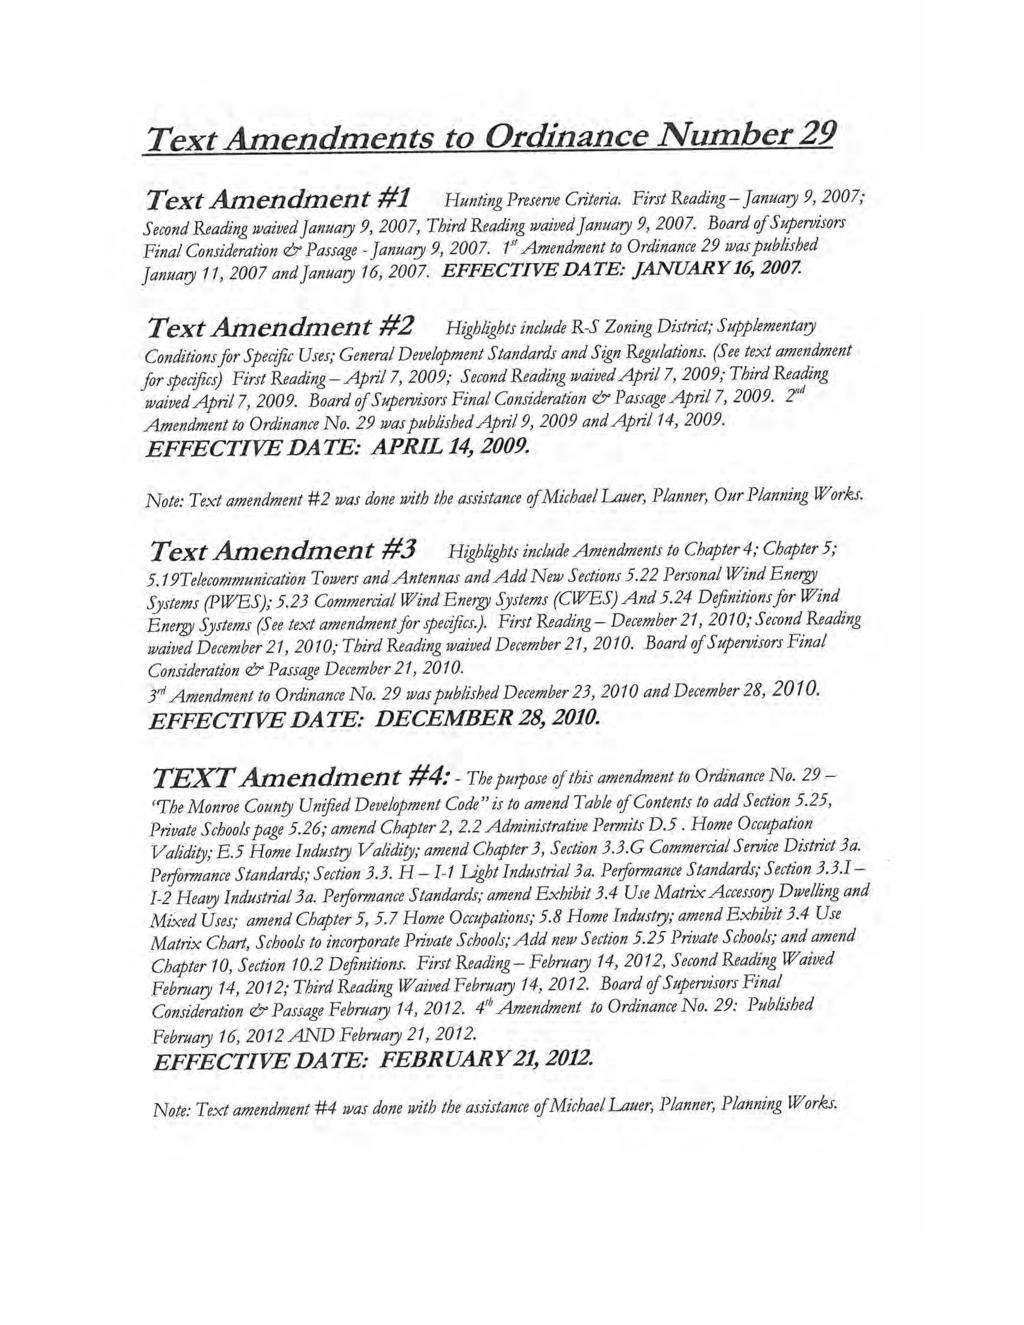 Text Amendments to Ordinance Number 29 Text Amendment #1 Hunting Preserve Criteria. First Reading January 9, 2007; Second Reading waived January 9, 2007, Third Reading waived January 9, 2007.